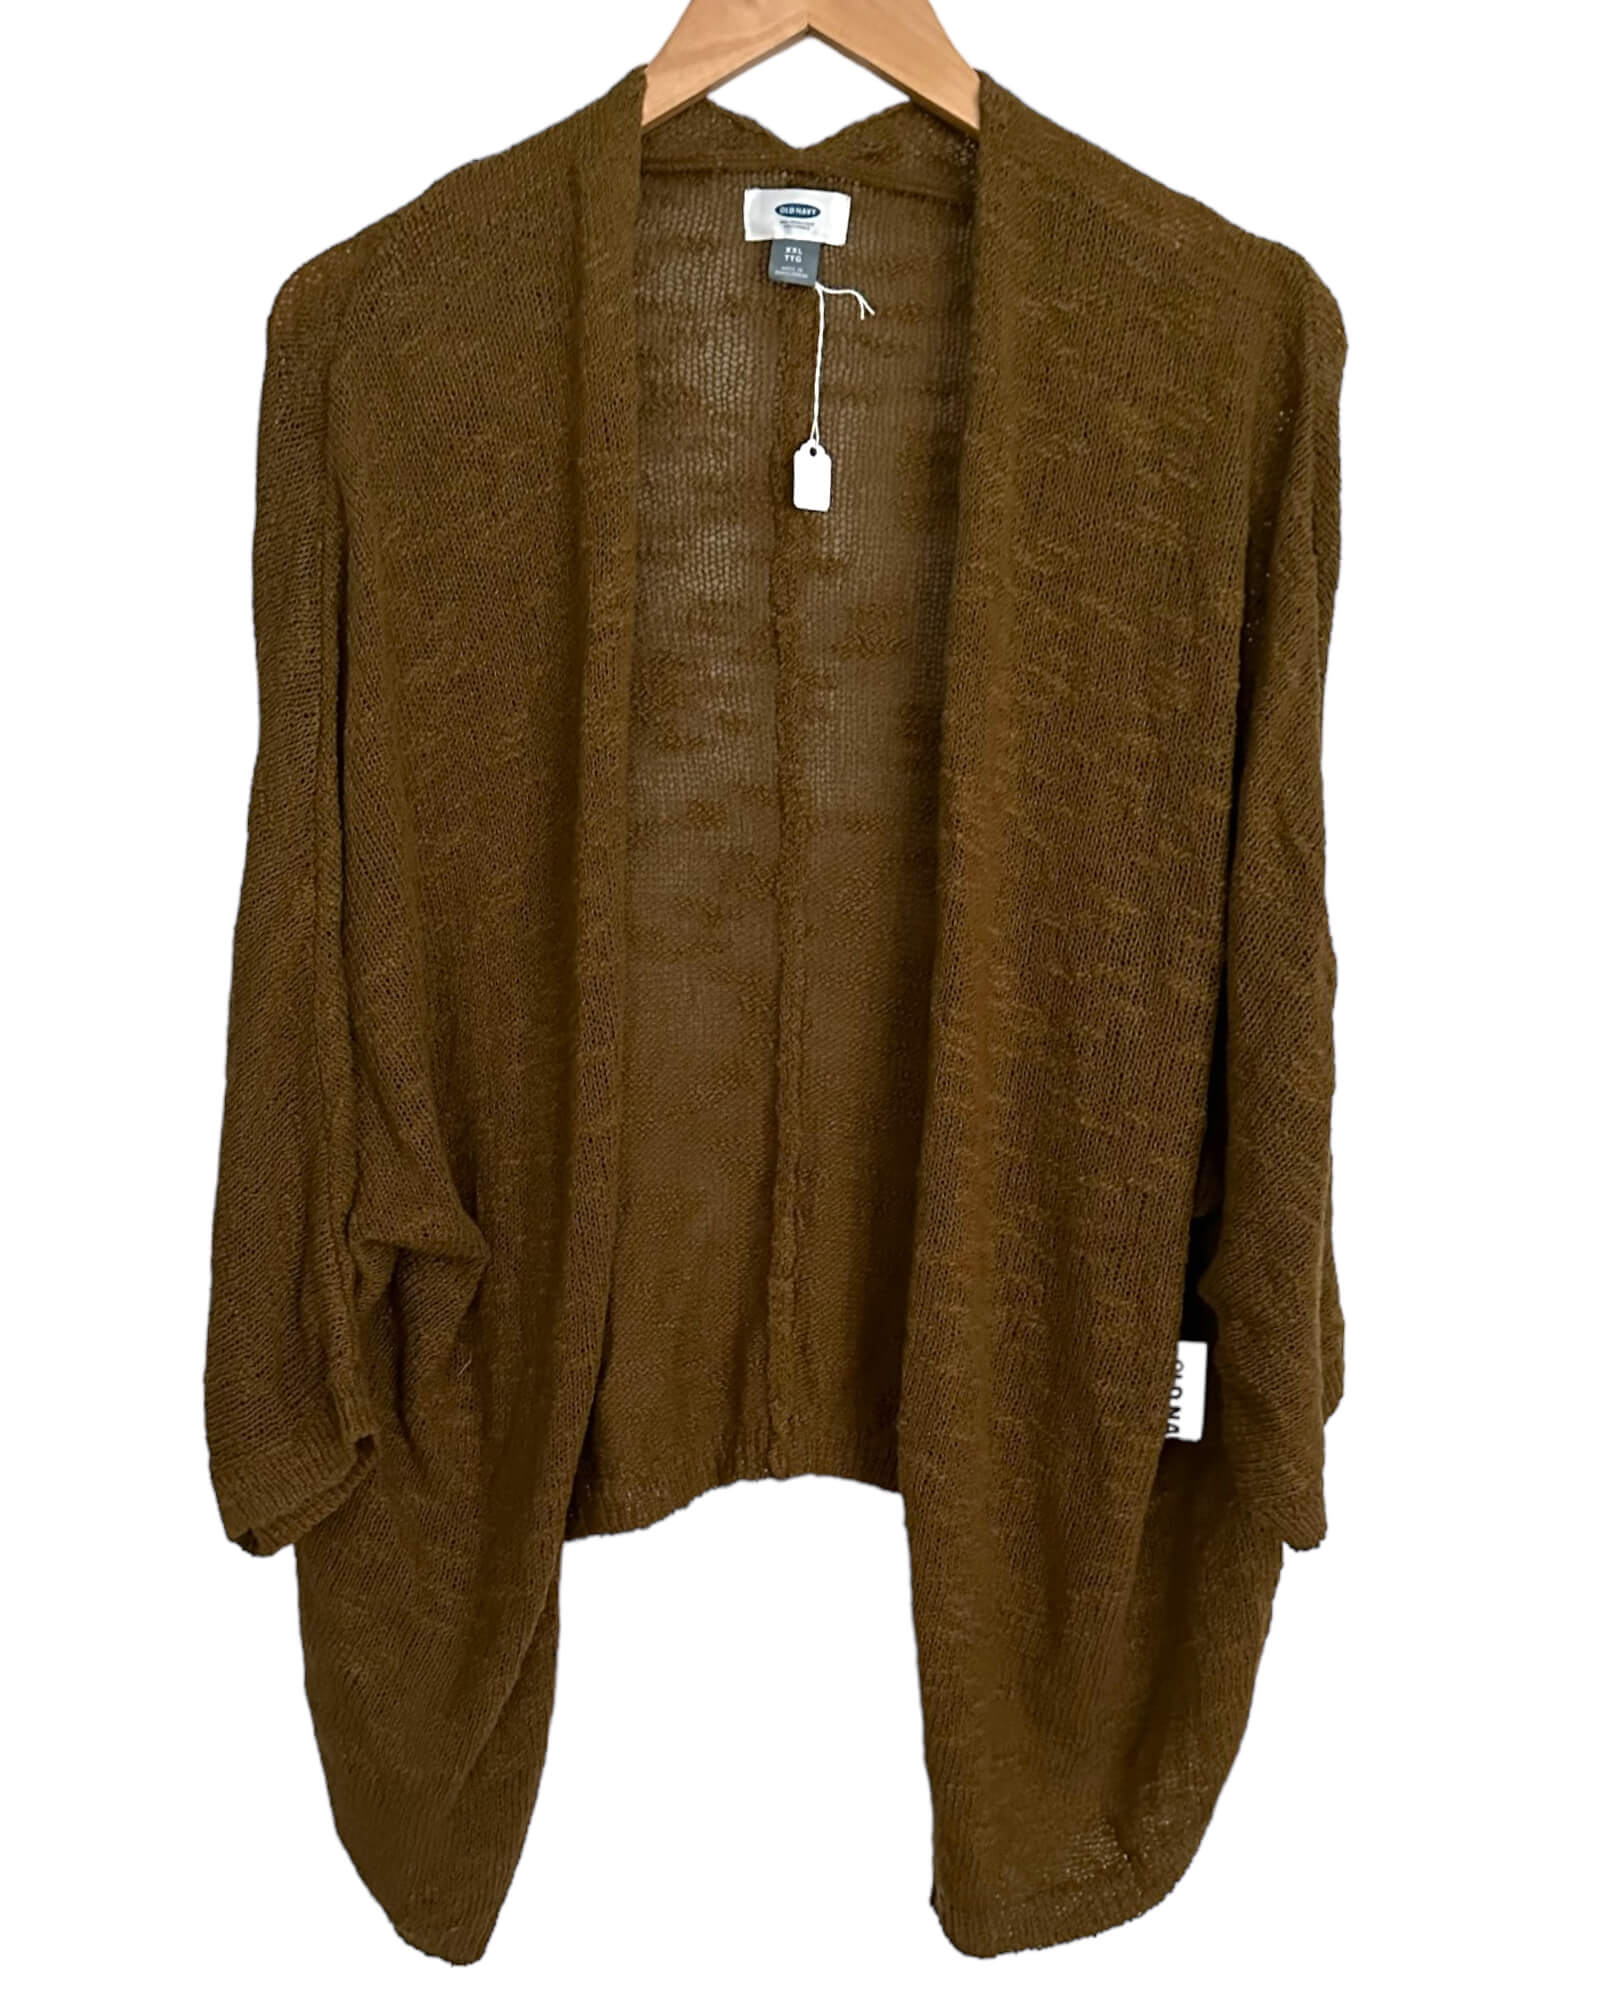 Warm Autumn OLD NAVY moss brown slub knit open cardigan sweater